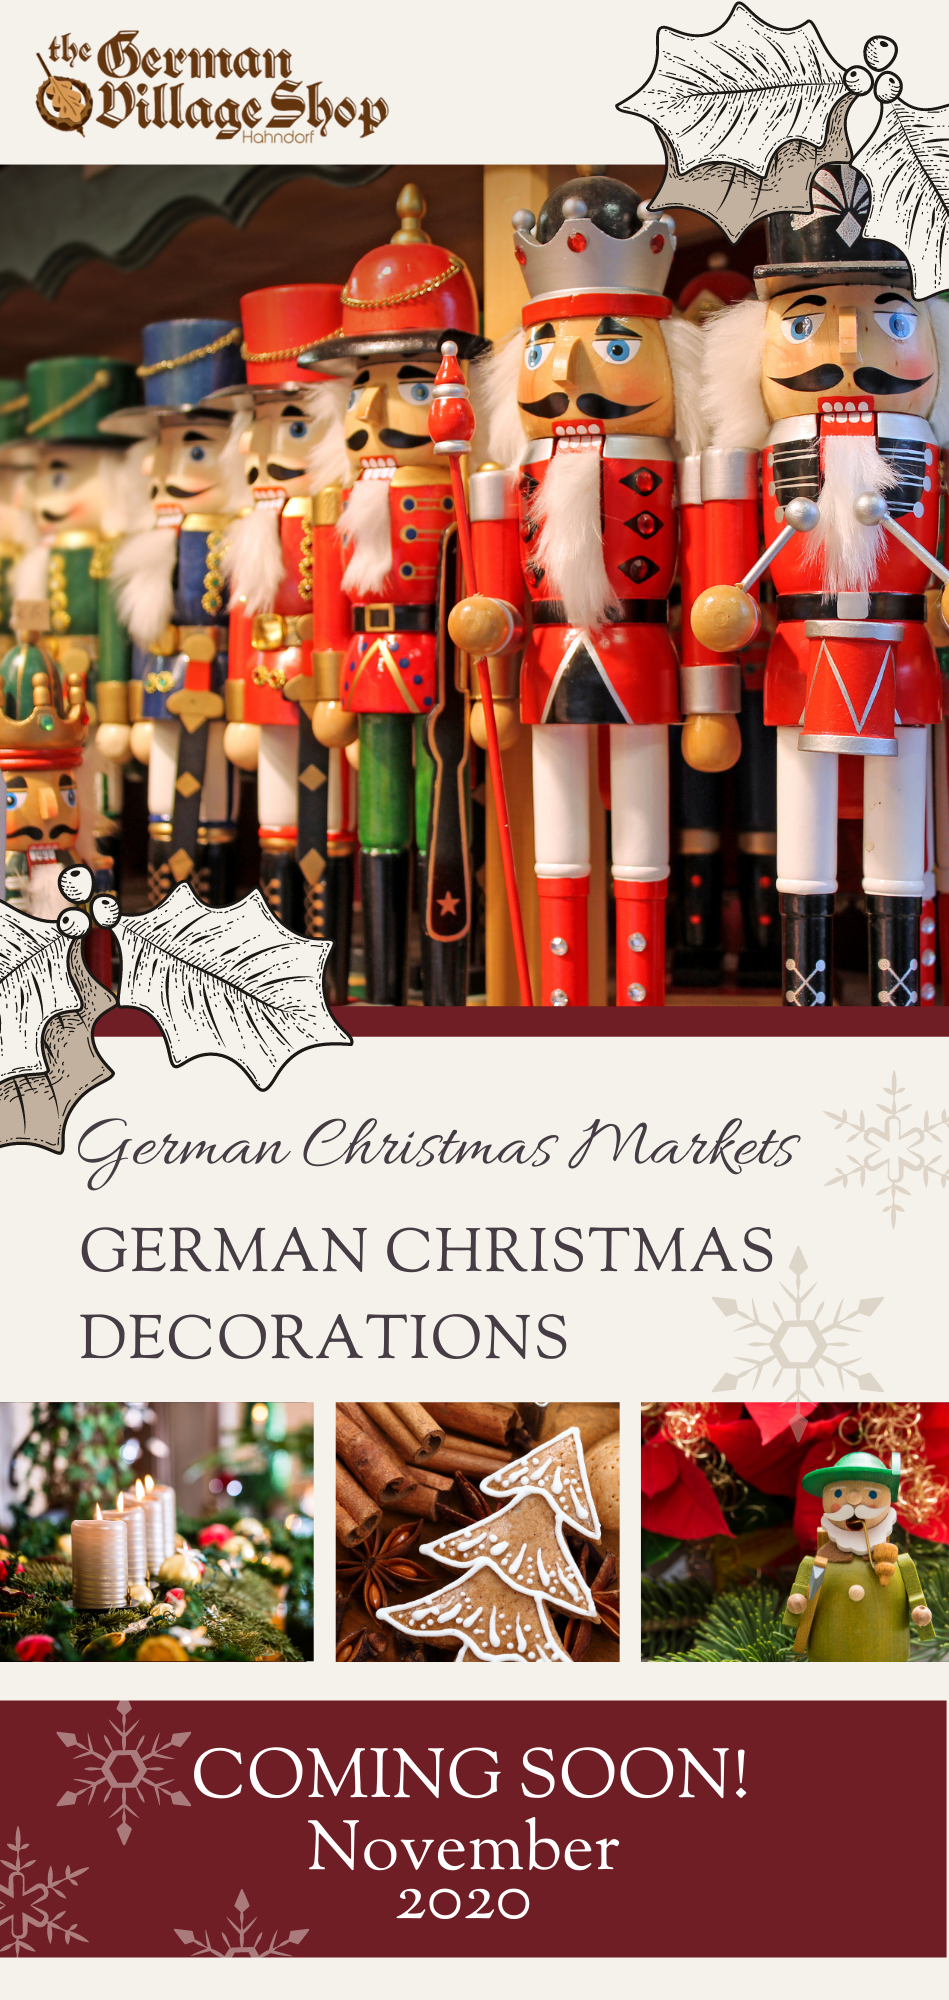 German Christmas decorations